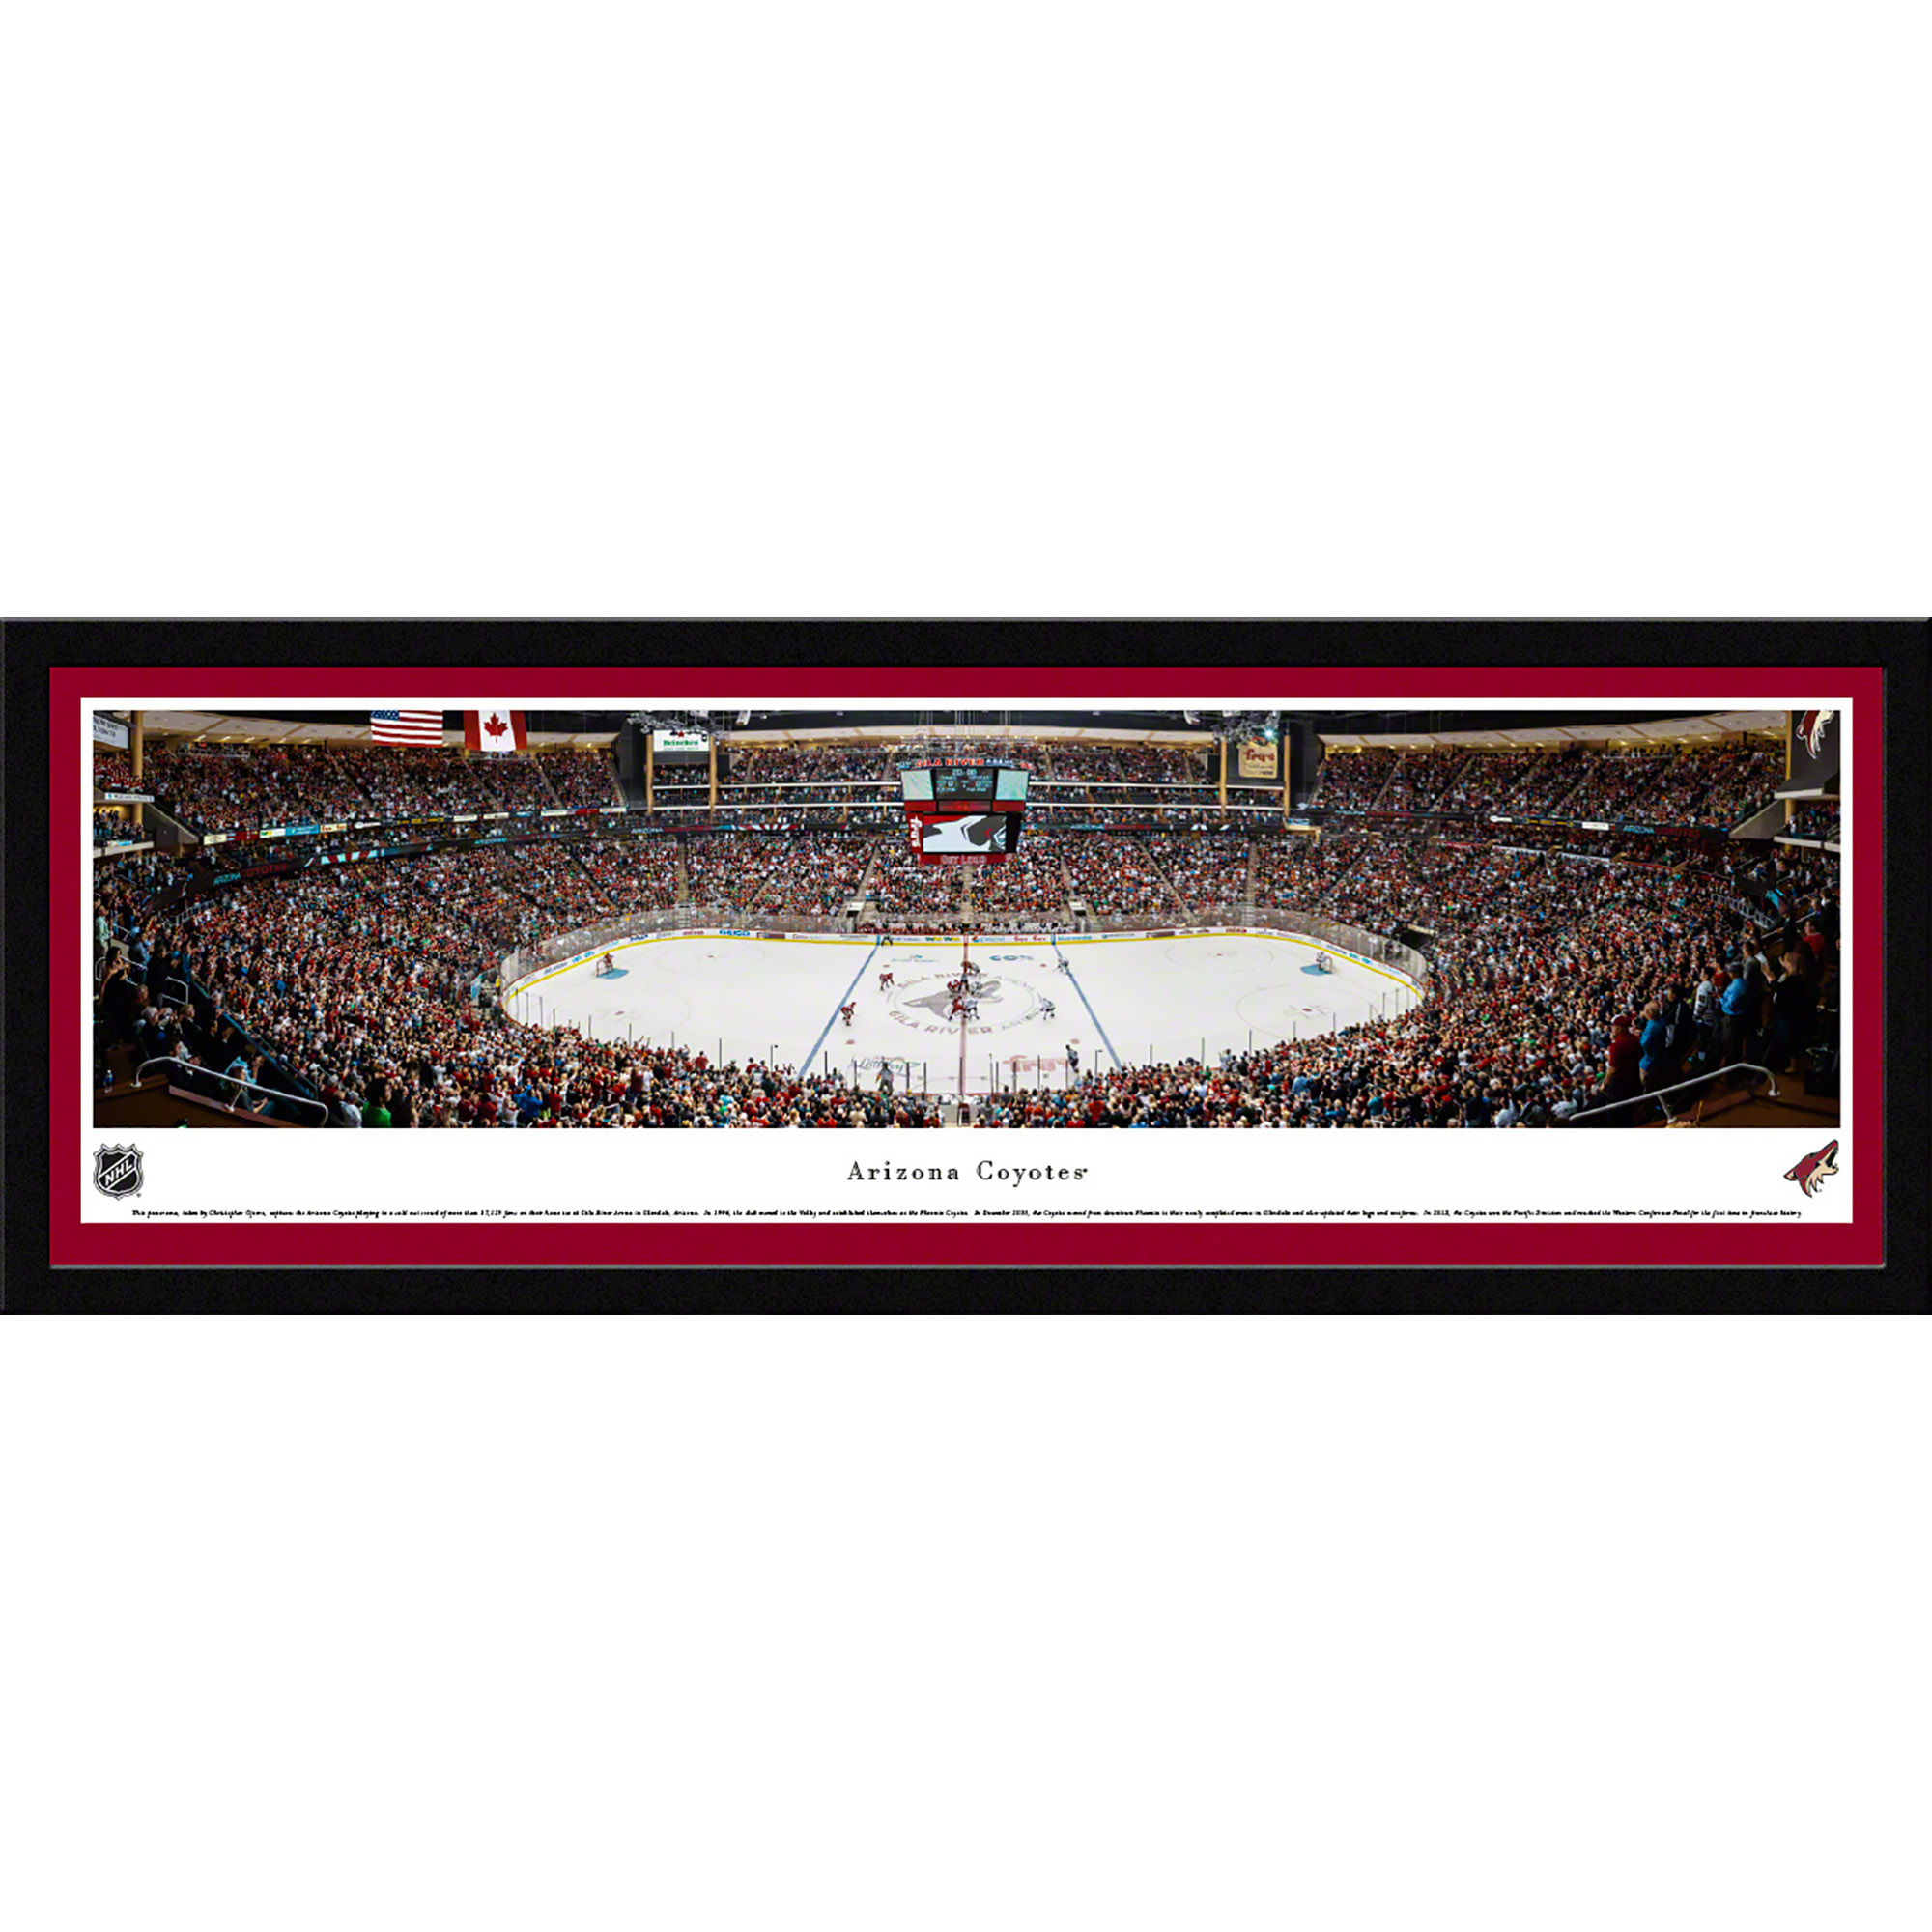 Arizona Coyotes - Center Ice at Gila River Arena - Blakeway Panoramas NHL Print with Select Frame and Single Mat - image 1 of 1